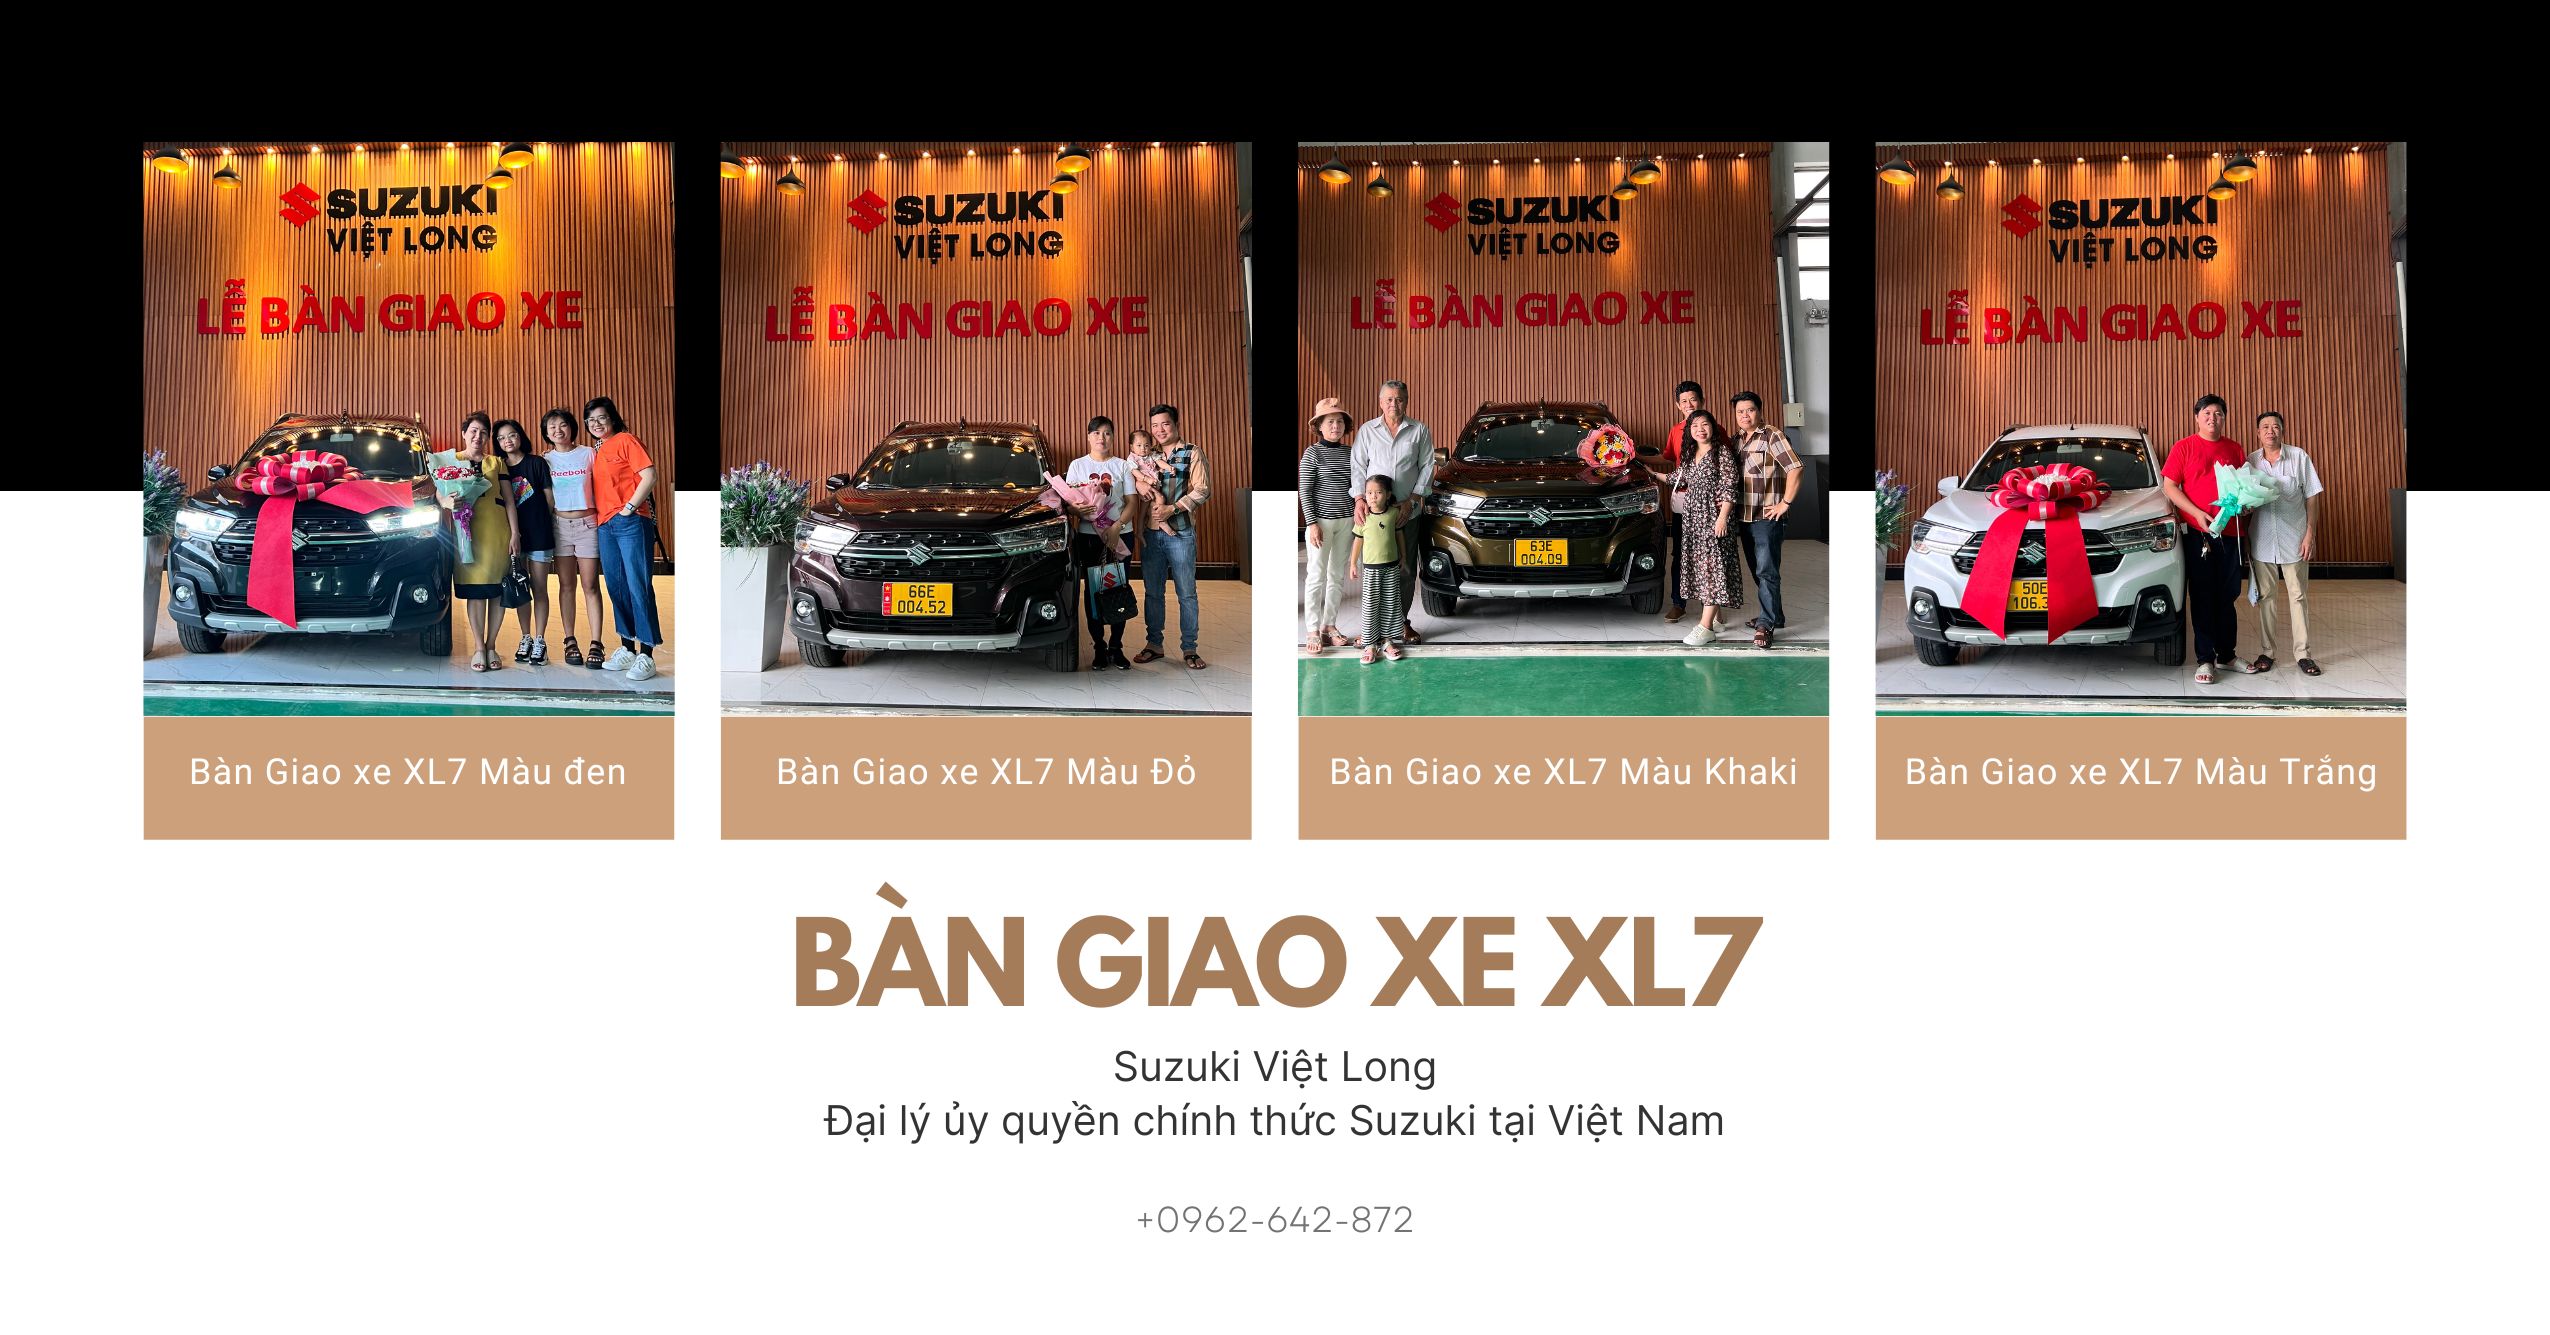 bàn giao xe XL7 tại Suzuki Việt Long